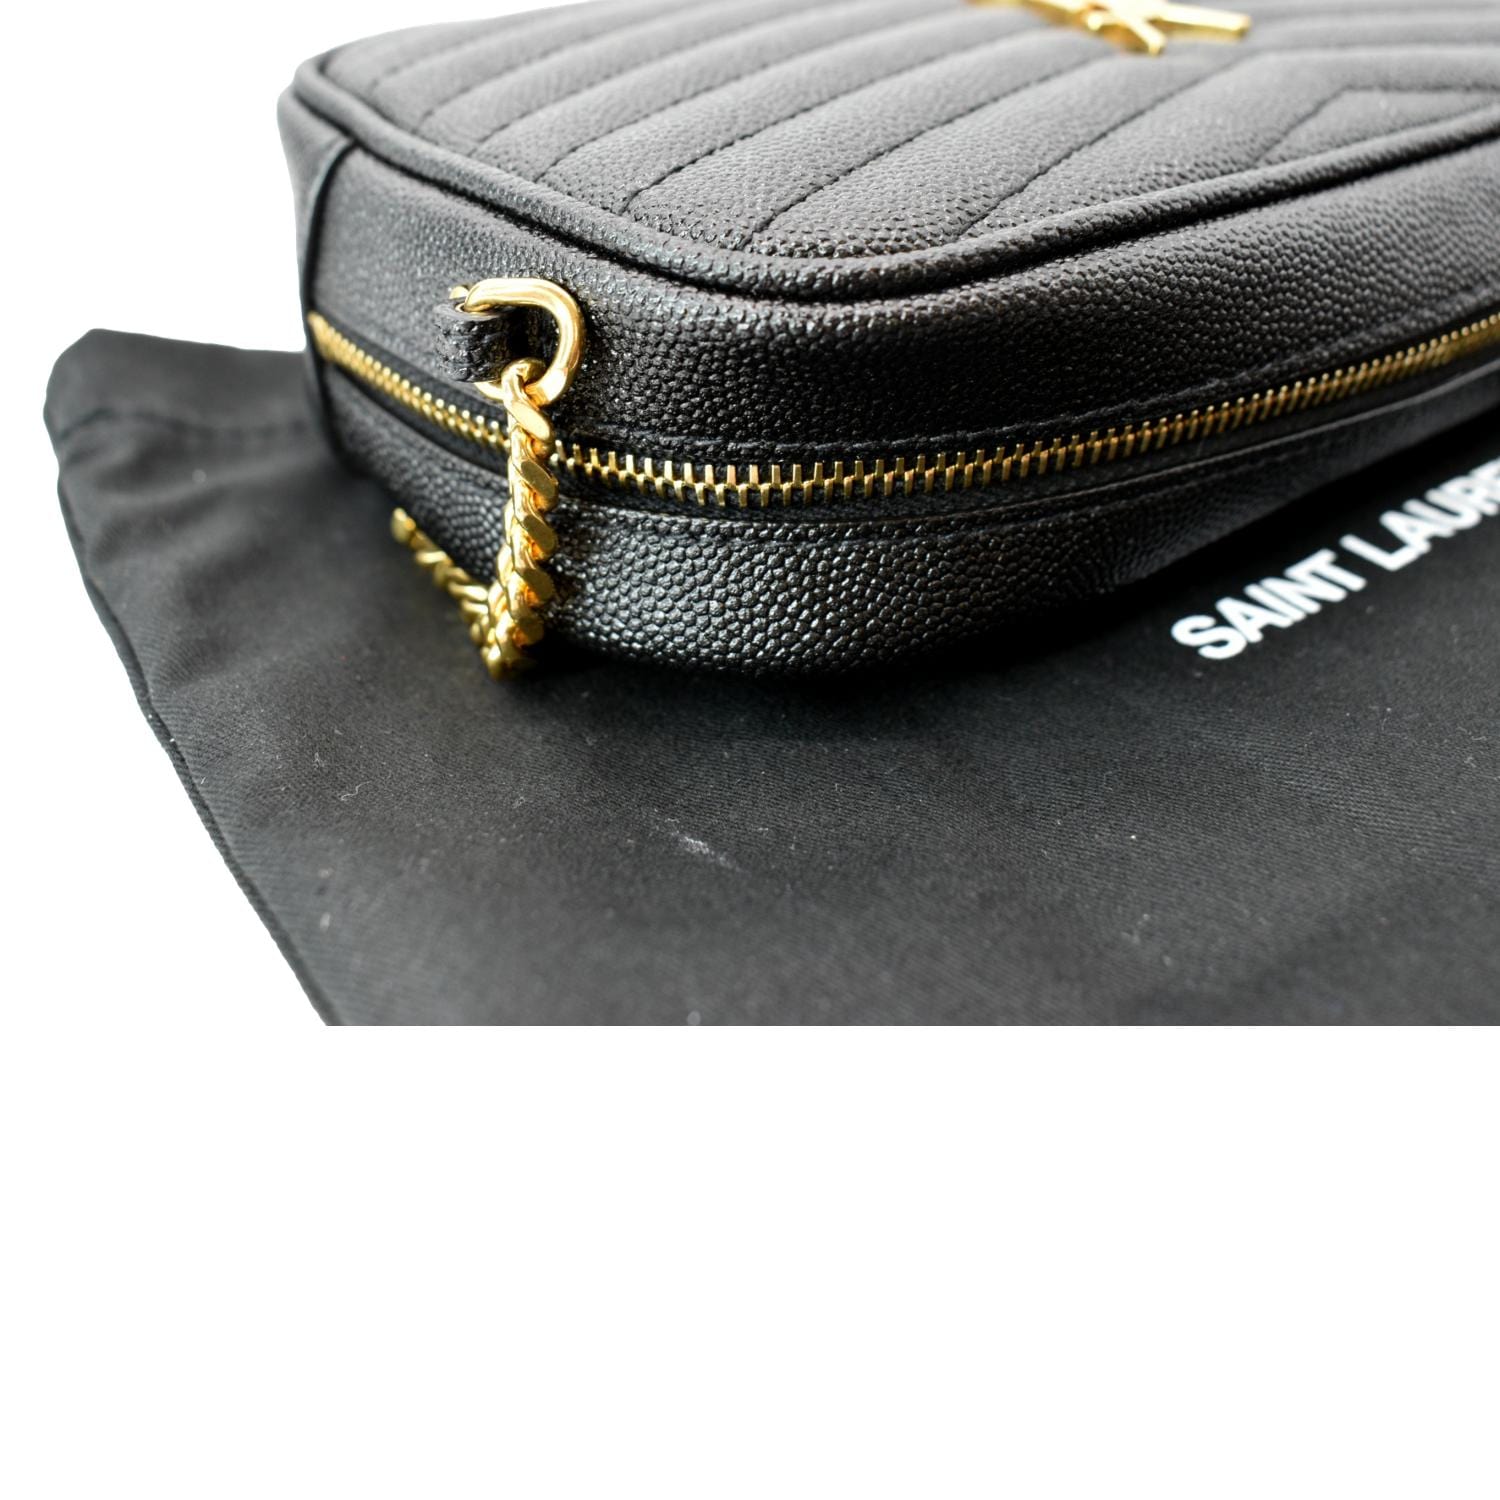 Saint Laurent Mini Lou Quilted Leather Camera Bag - Black